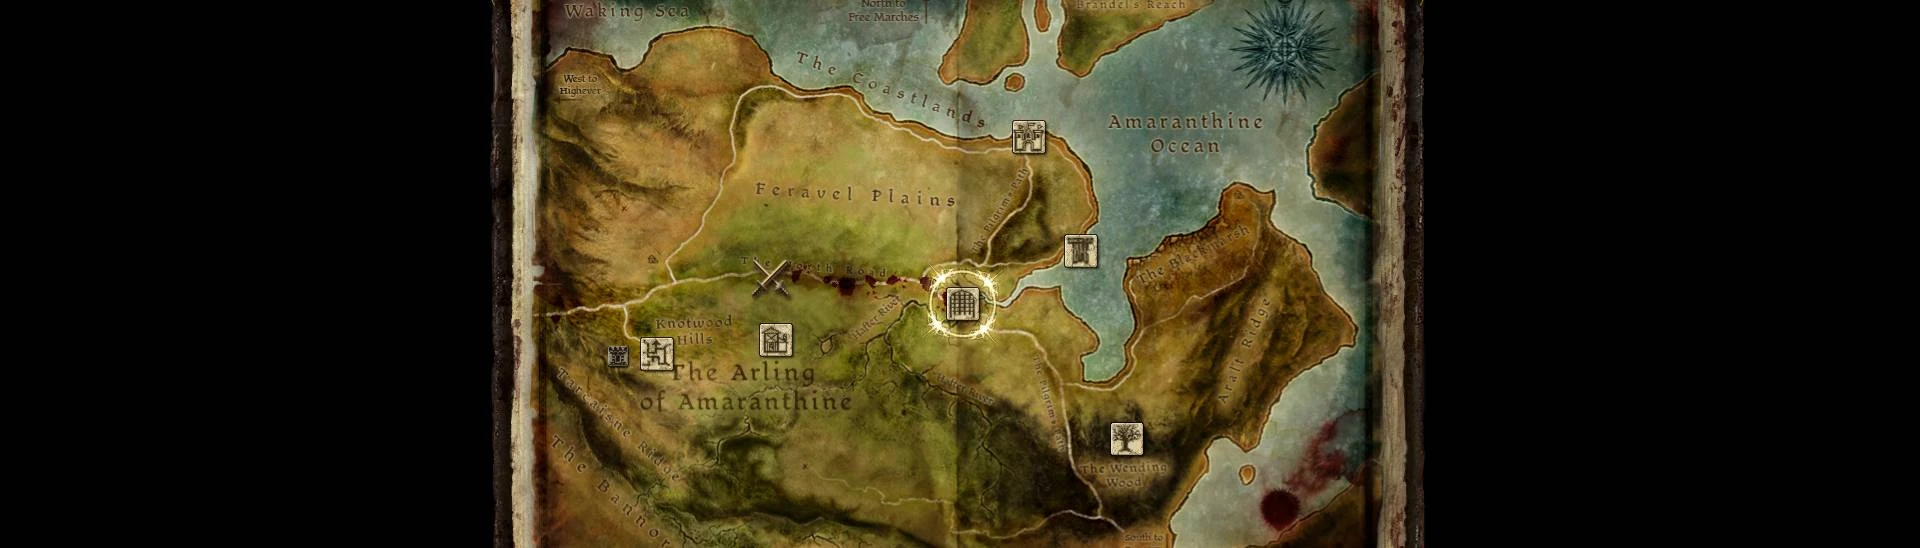 Steam Community :: Dragon Age: Origins - Awakening